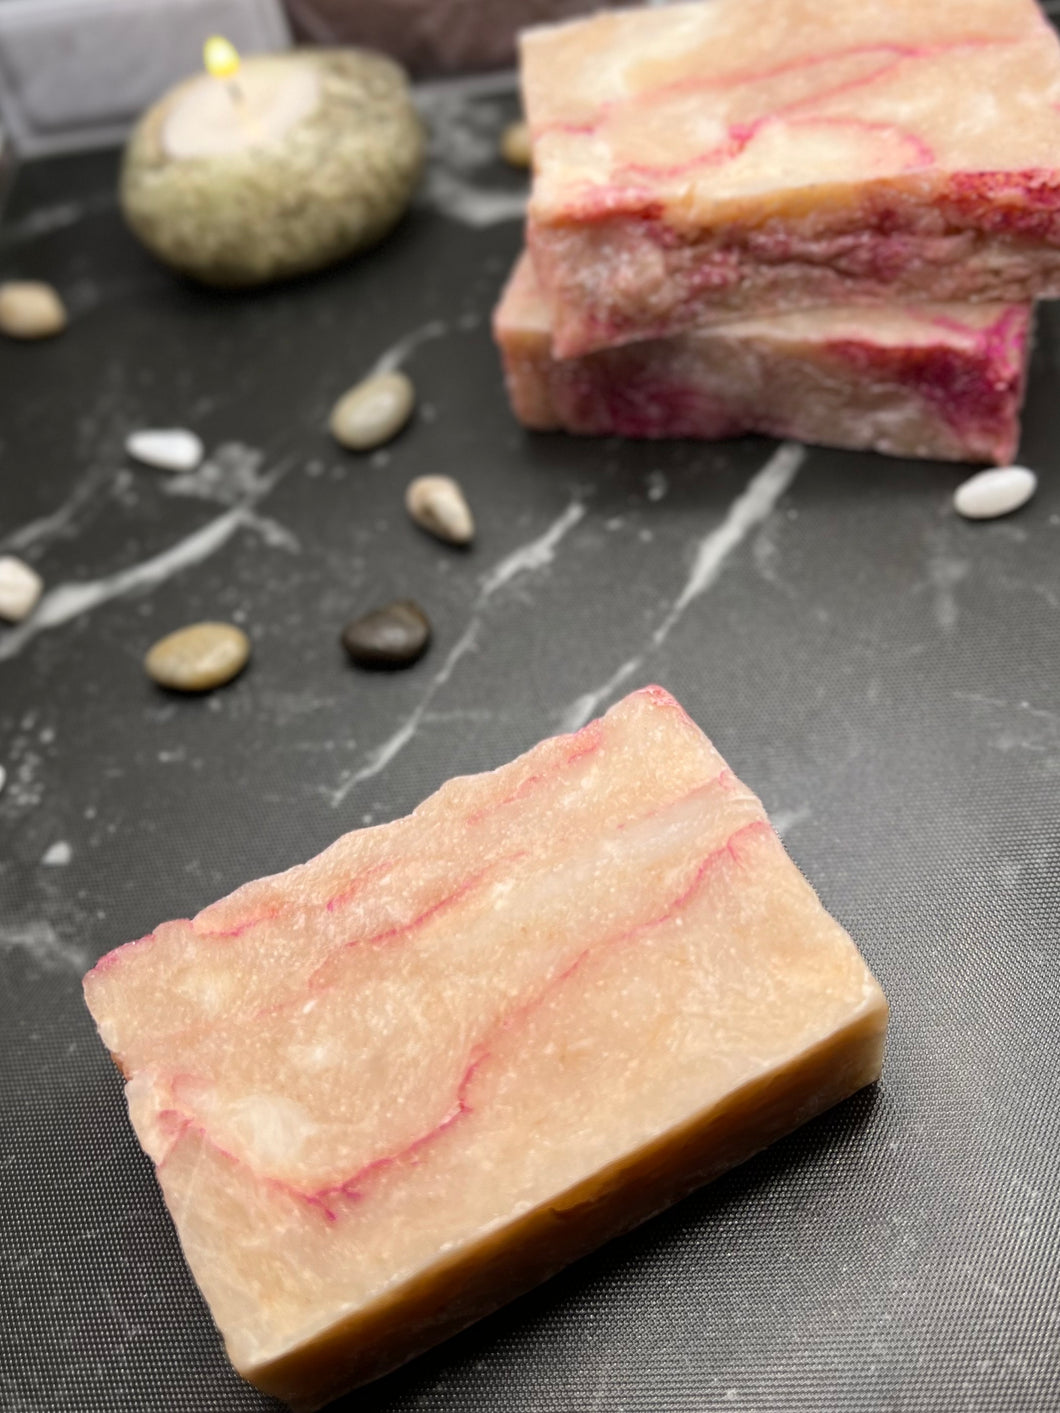 Cherry Almond Oatmeal - Artisan Soap